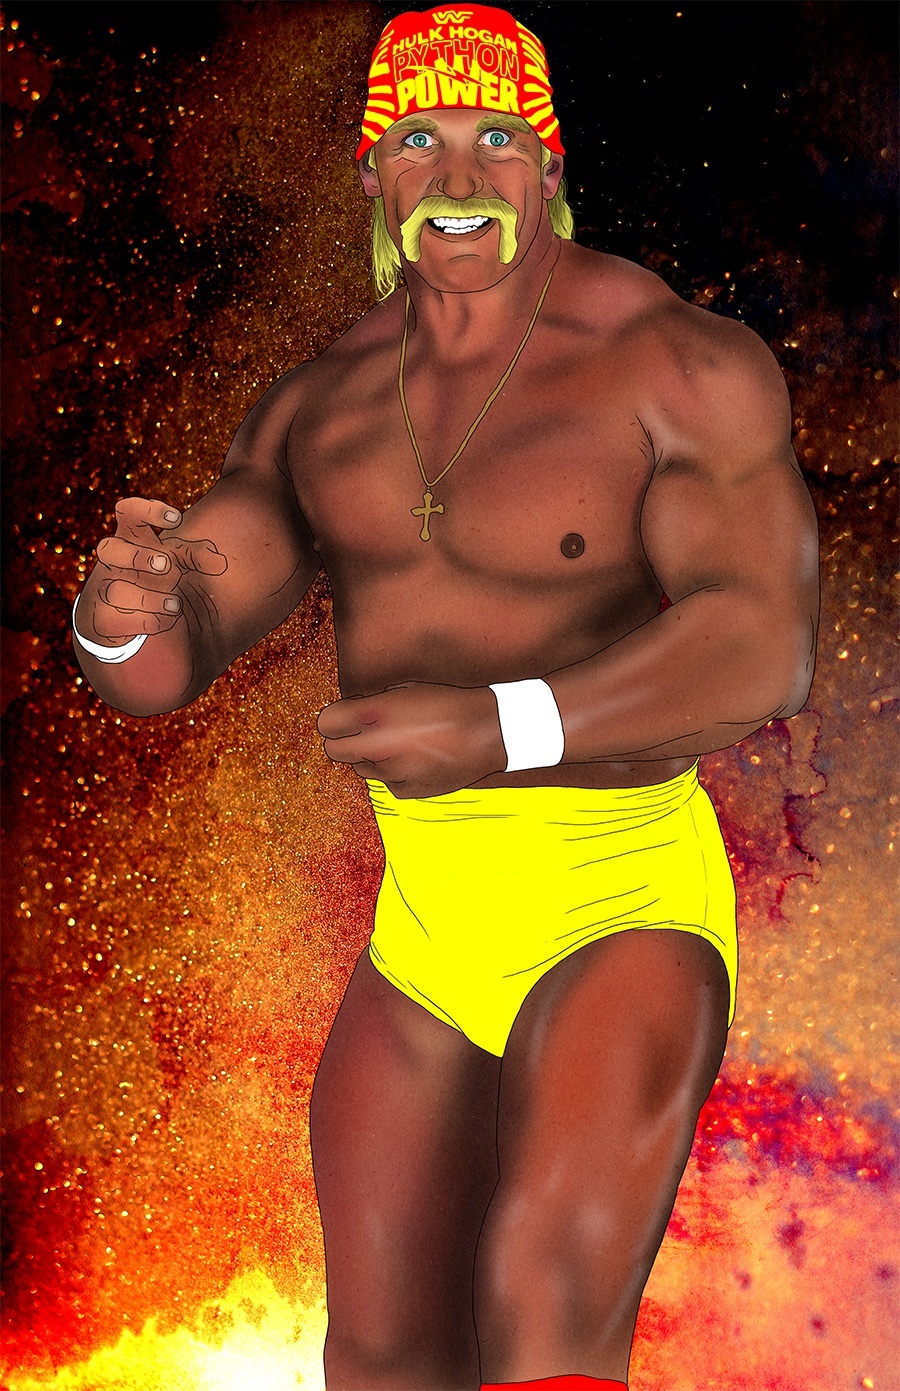 Hulk Hogan Wwe 2k15 Wallpaper by Llliiipppsssyyy on DeviantArt